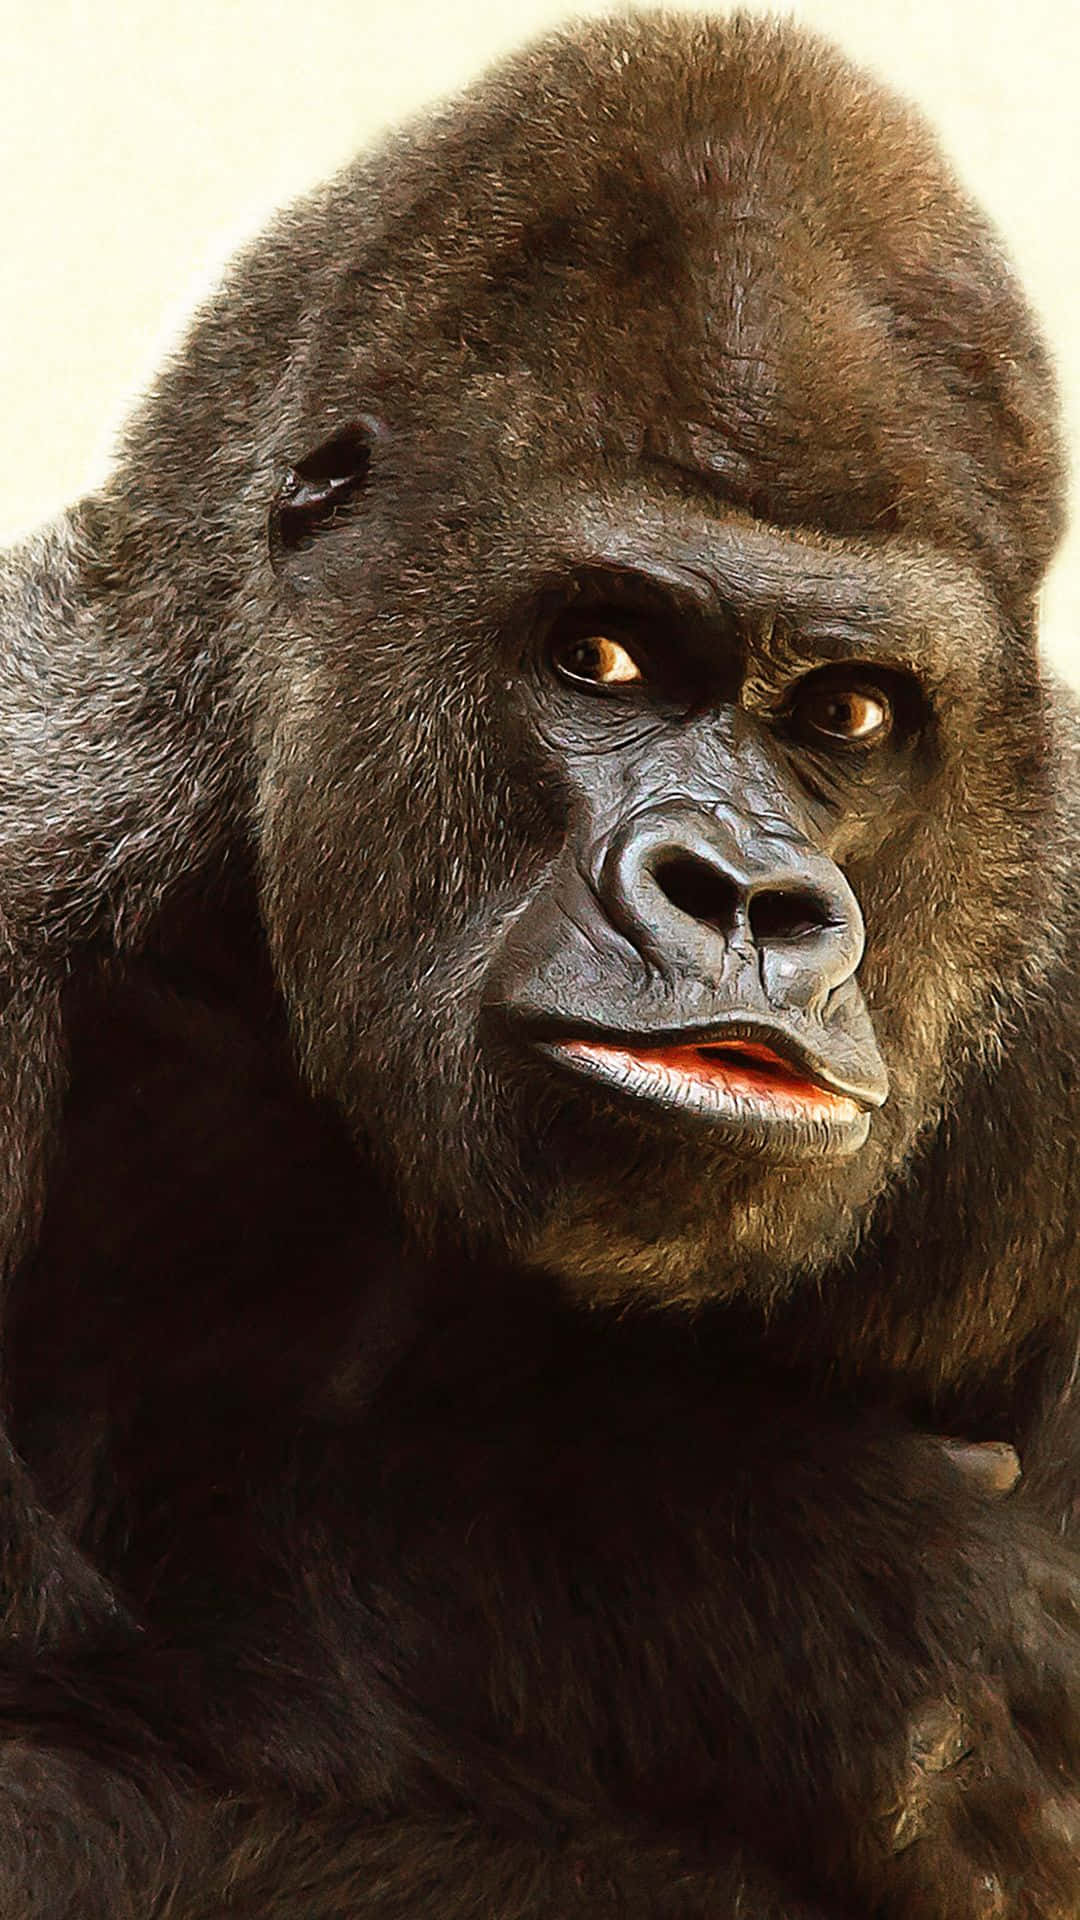 Iphonexs Max Gorilla Bakgrund Exotiskt Djur